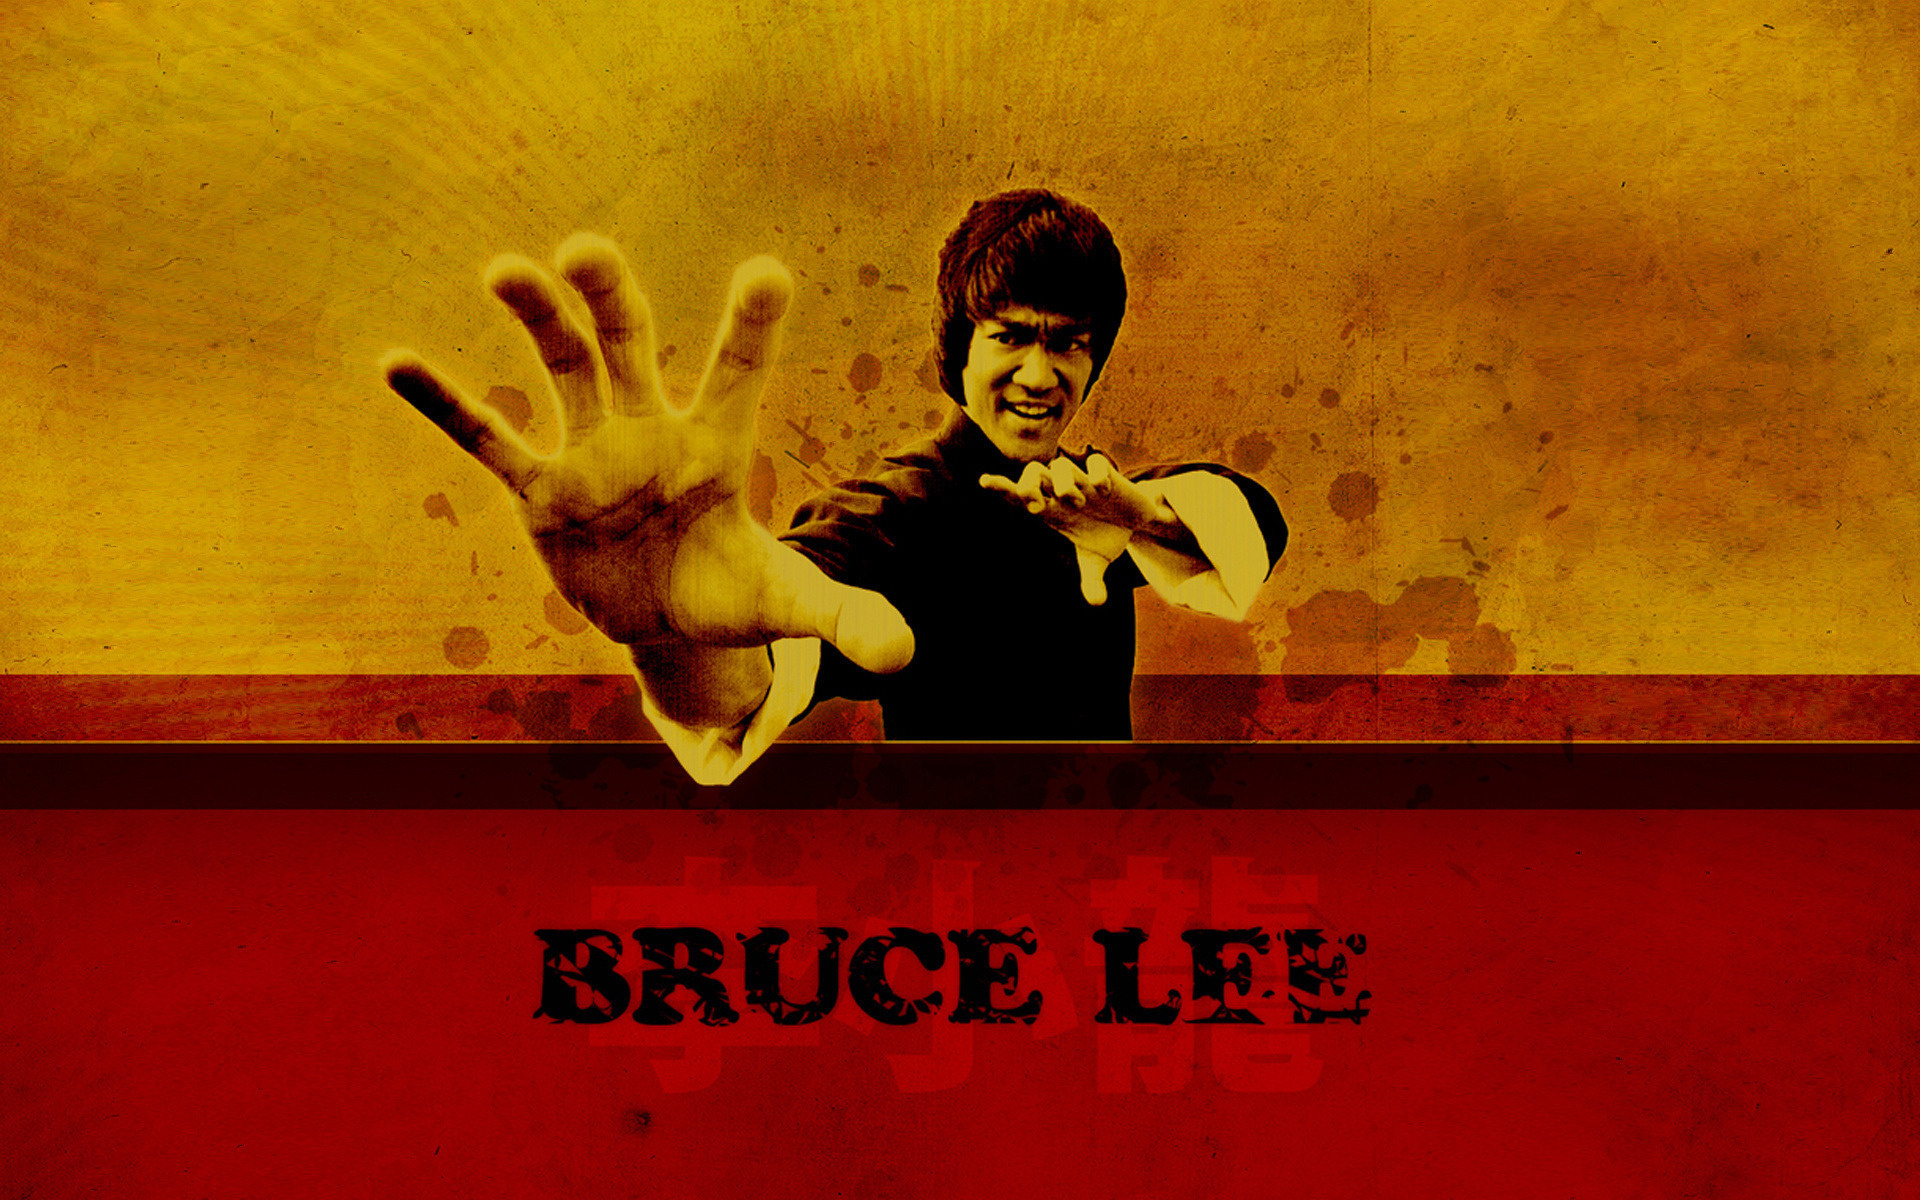 Bruce Lee pic.jpg